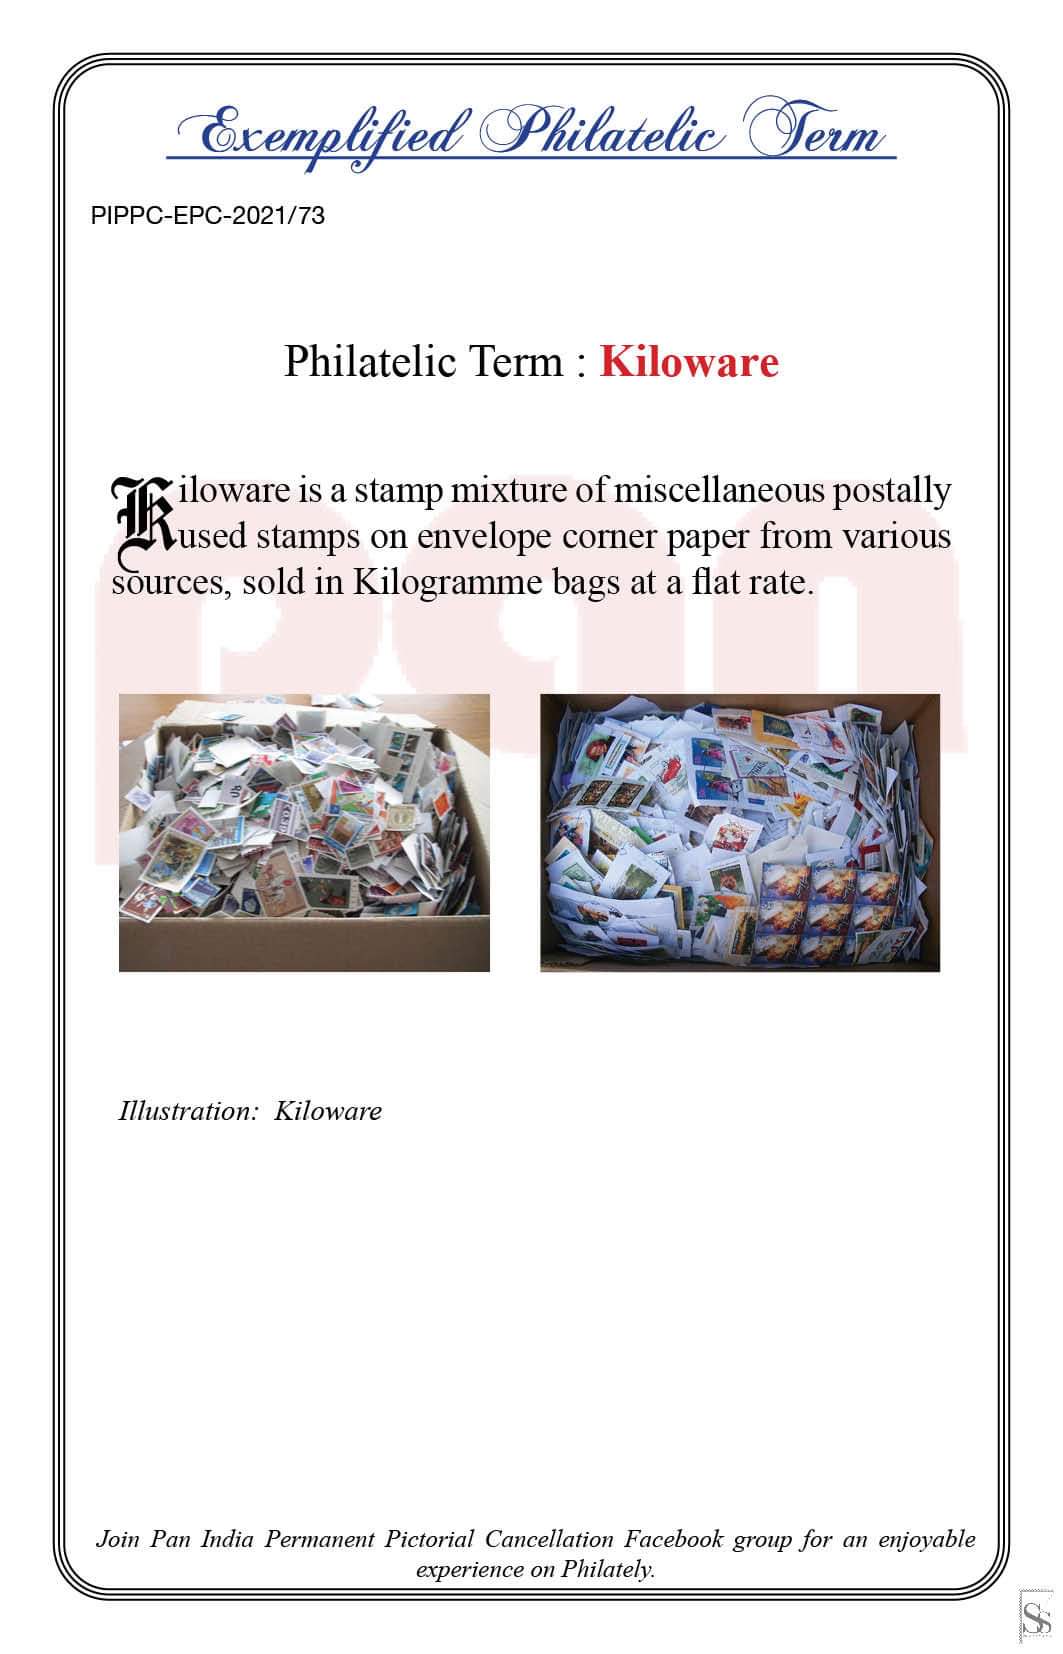 73. Today's Exemplified Philatelic term-Kiloware